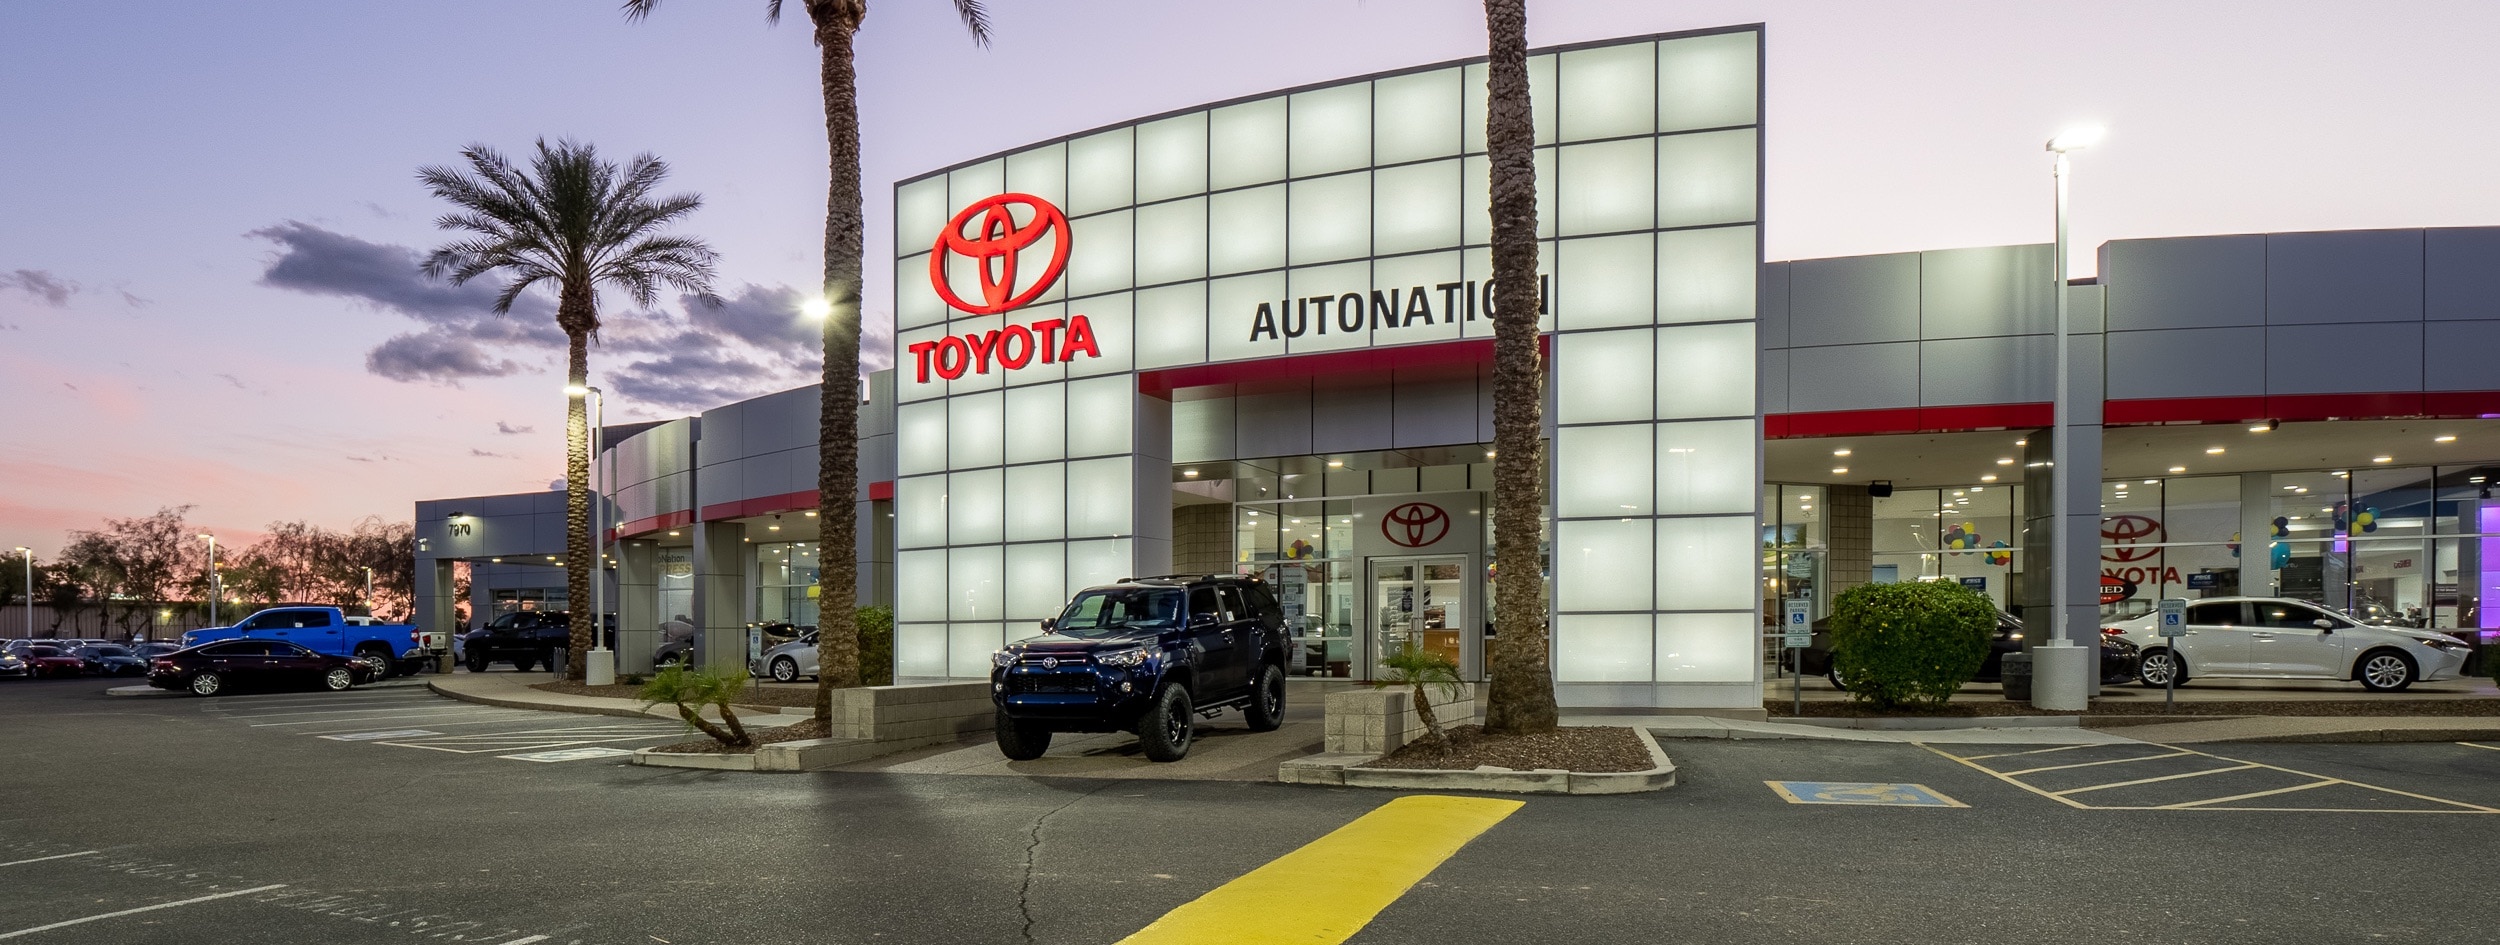 Toyota Dealership Near Me Tempe, AZ AutoNation Toyota Tempe